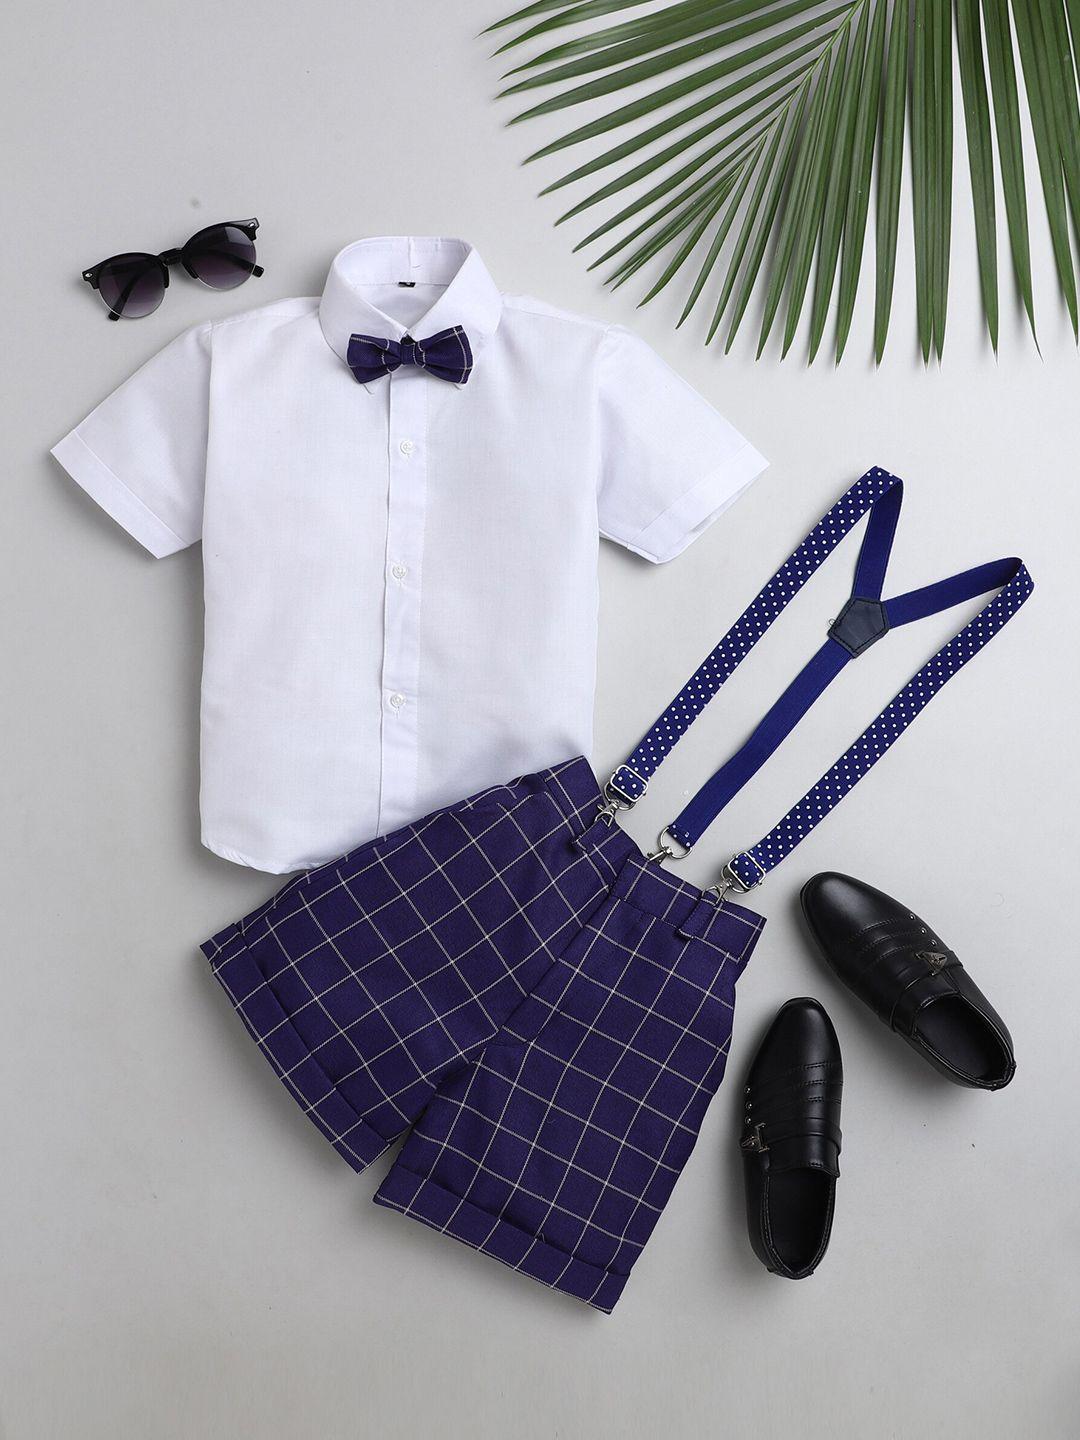 jeetethnics boys navy blue & white shirt & shorts with suspenders